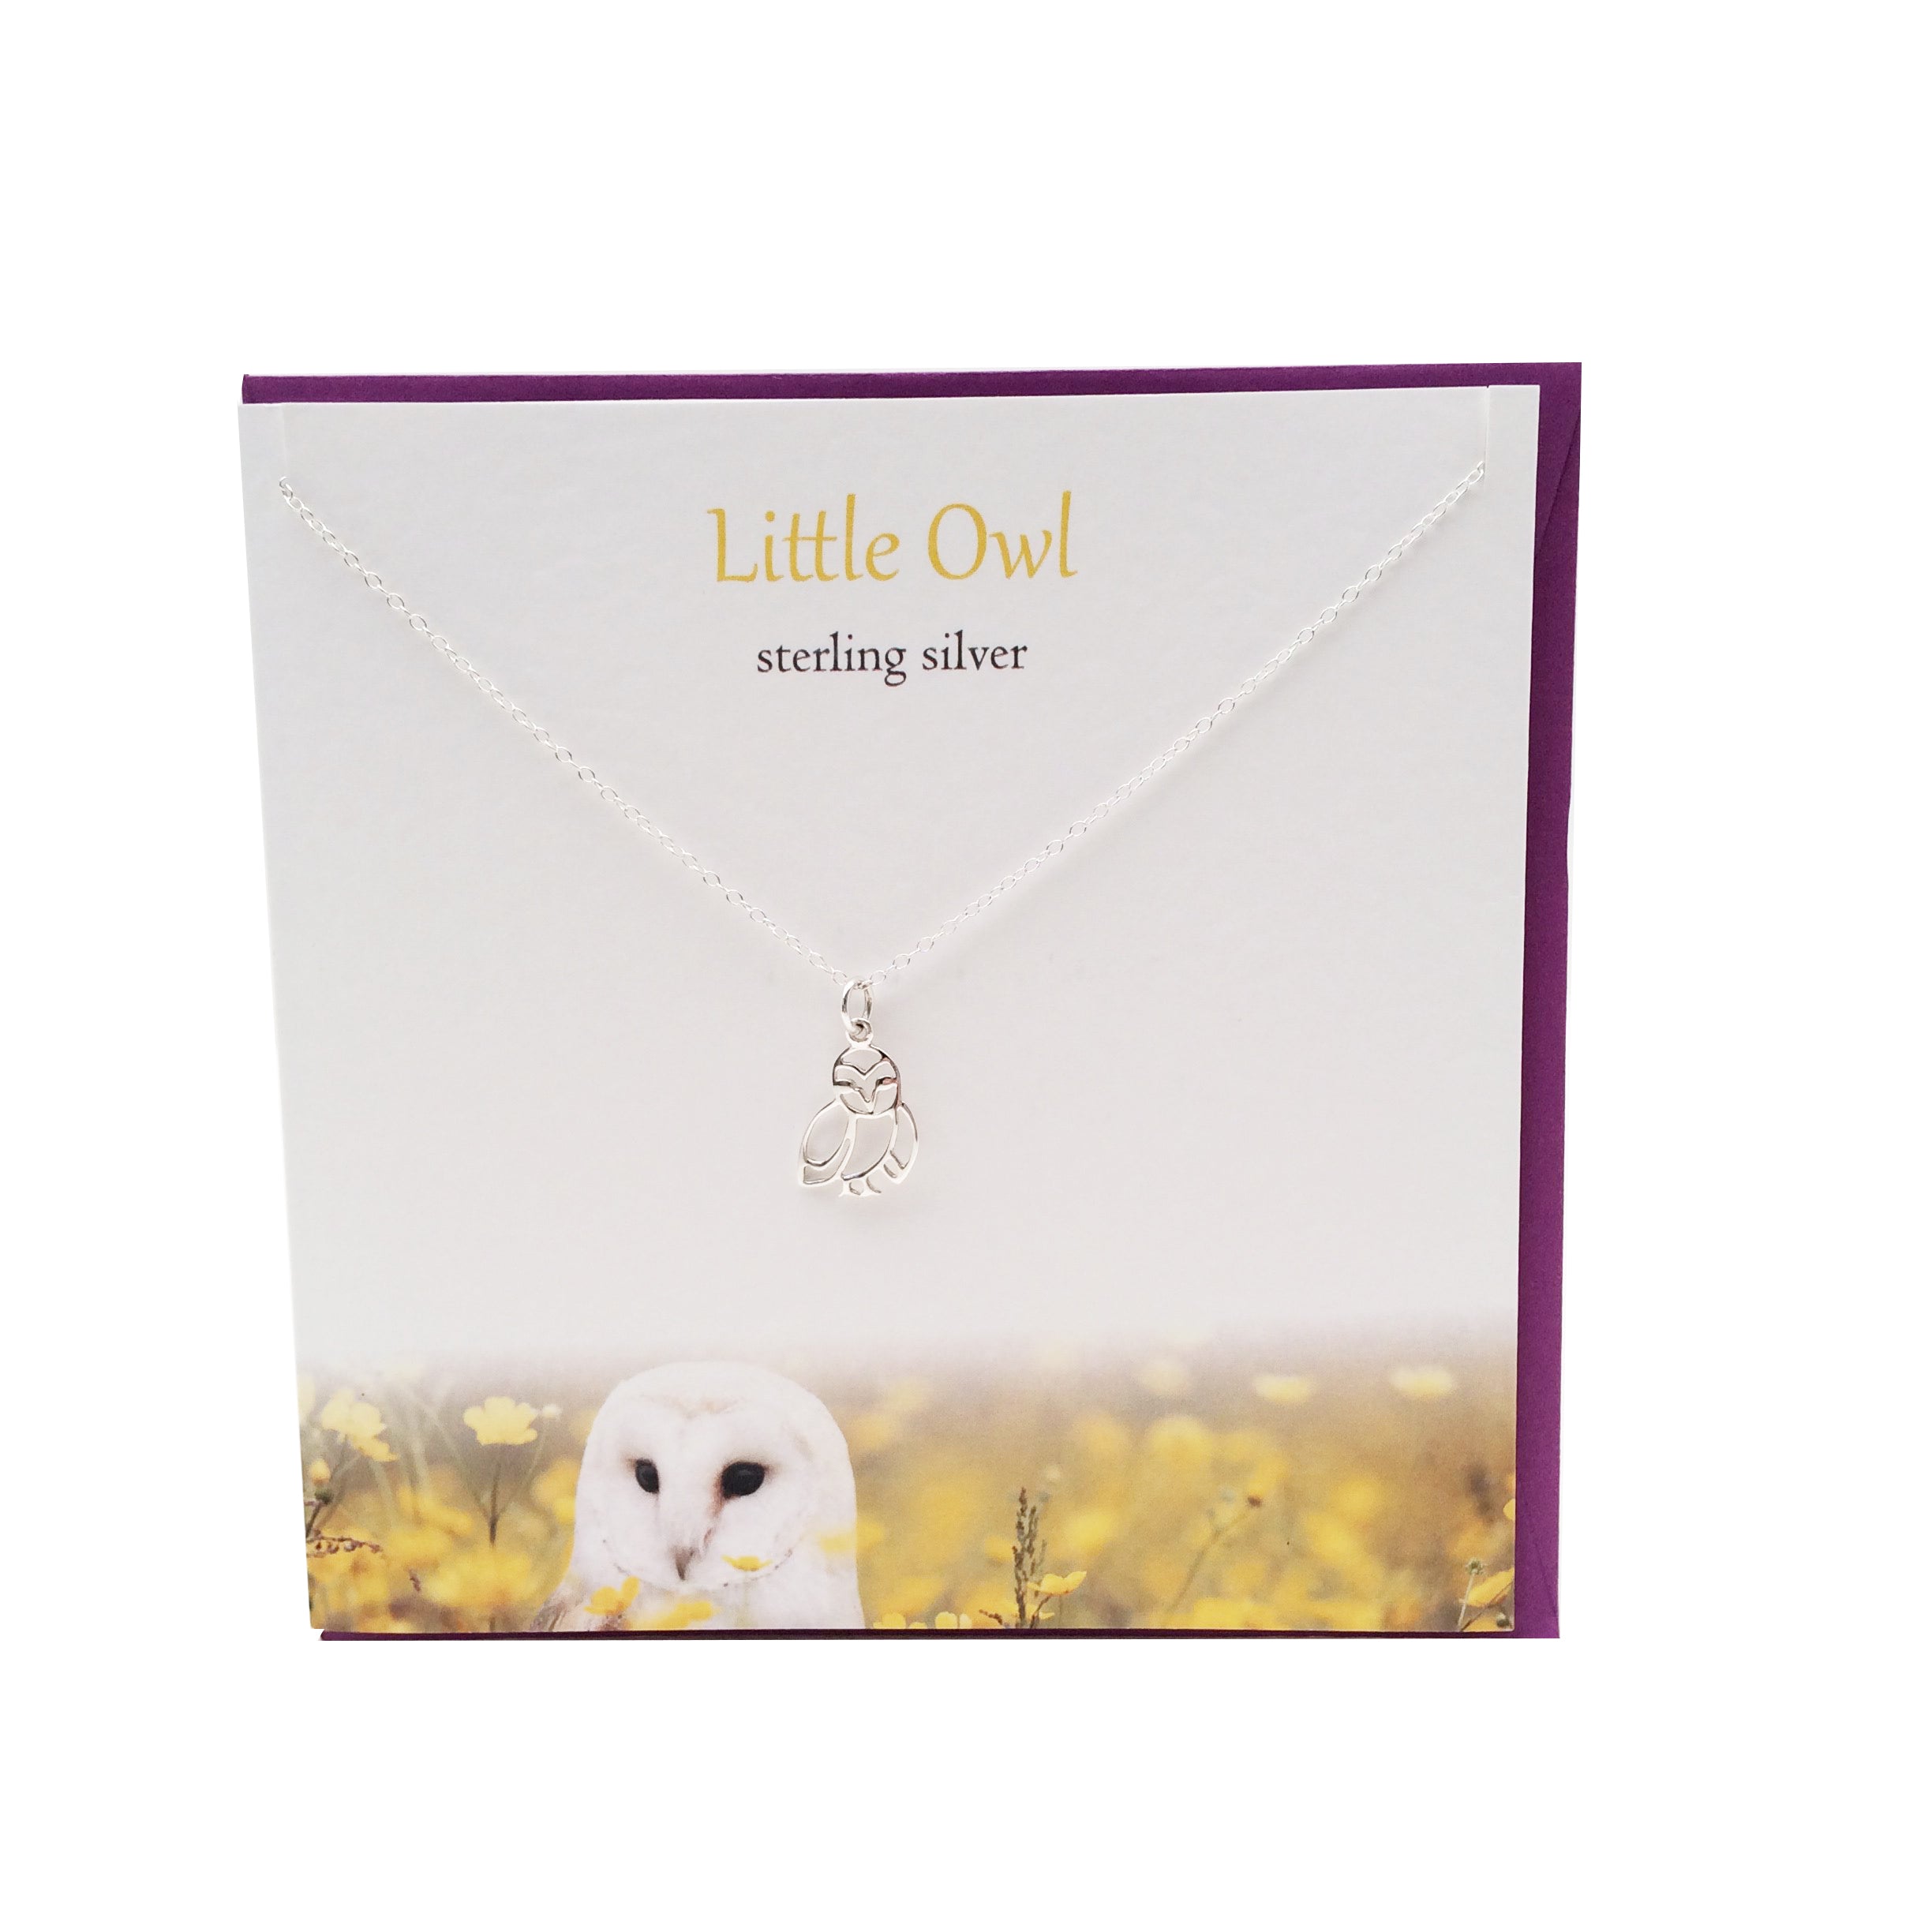 Little Owl silver necklace | The Silver Studio Scotland